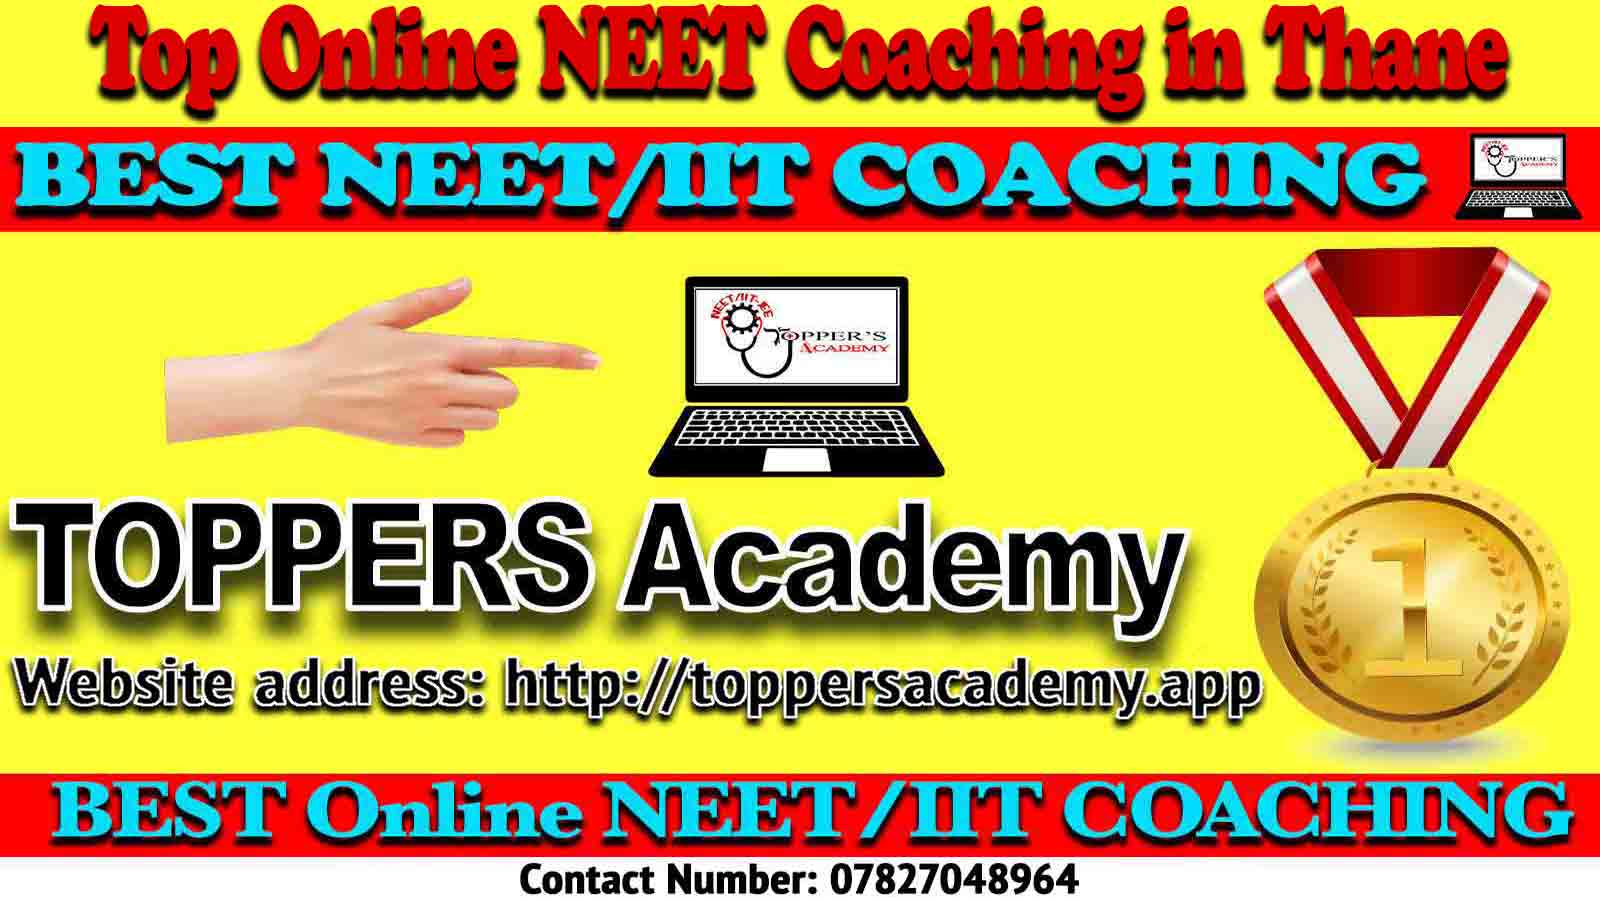 Best Online NEET Coaching in Thane